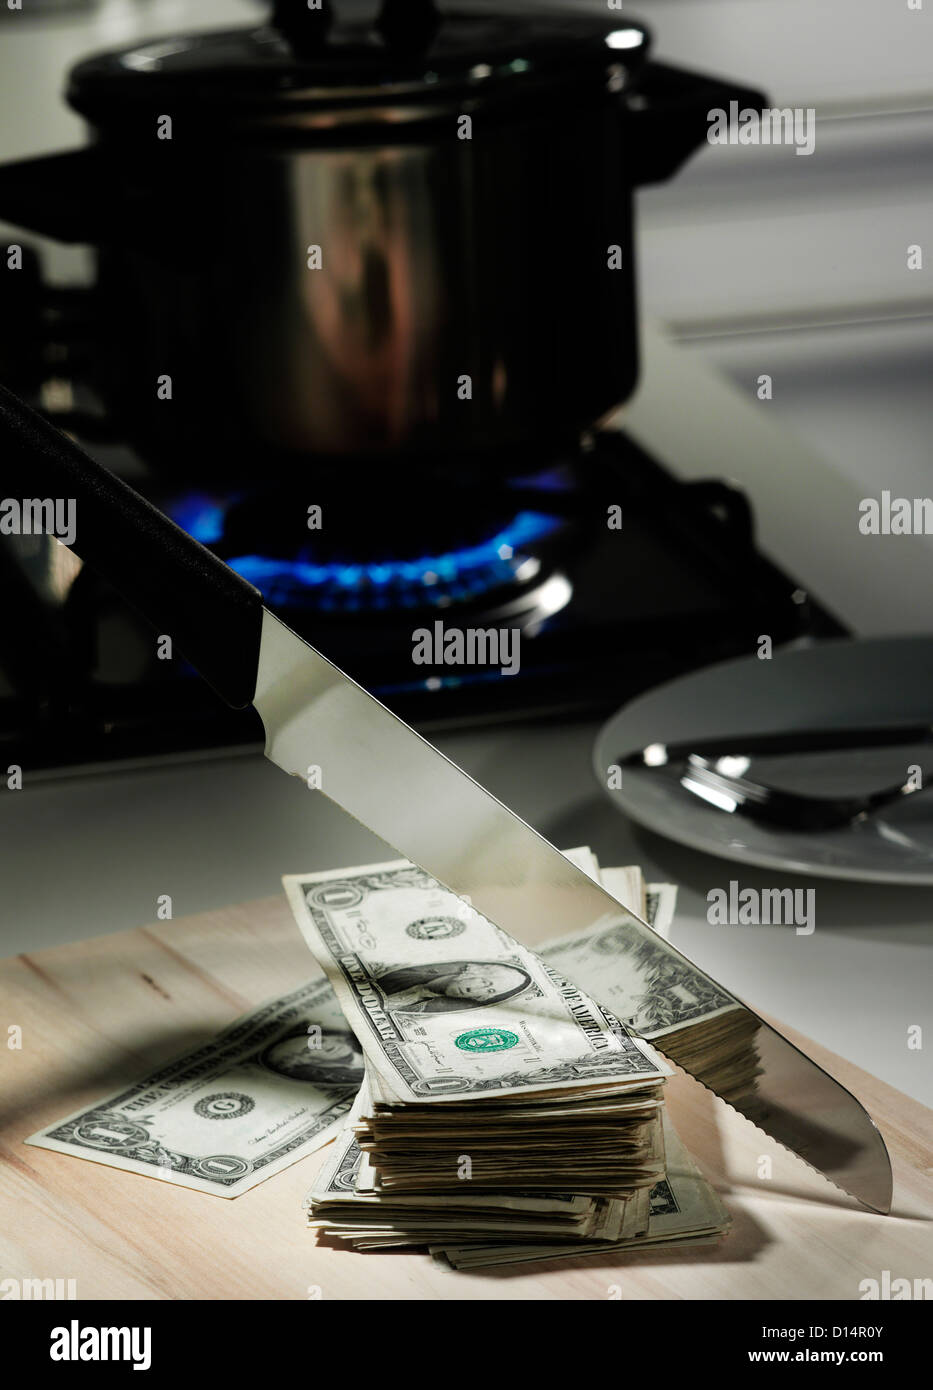 Dollar bills in frying pan on stove Stock Photo